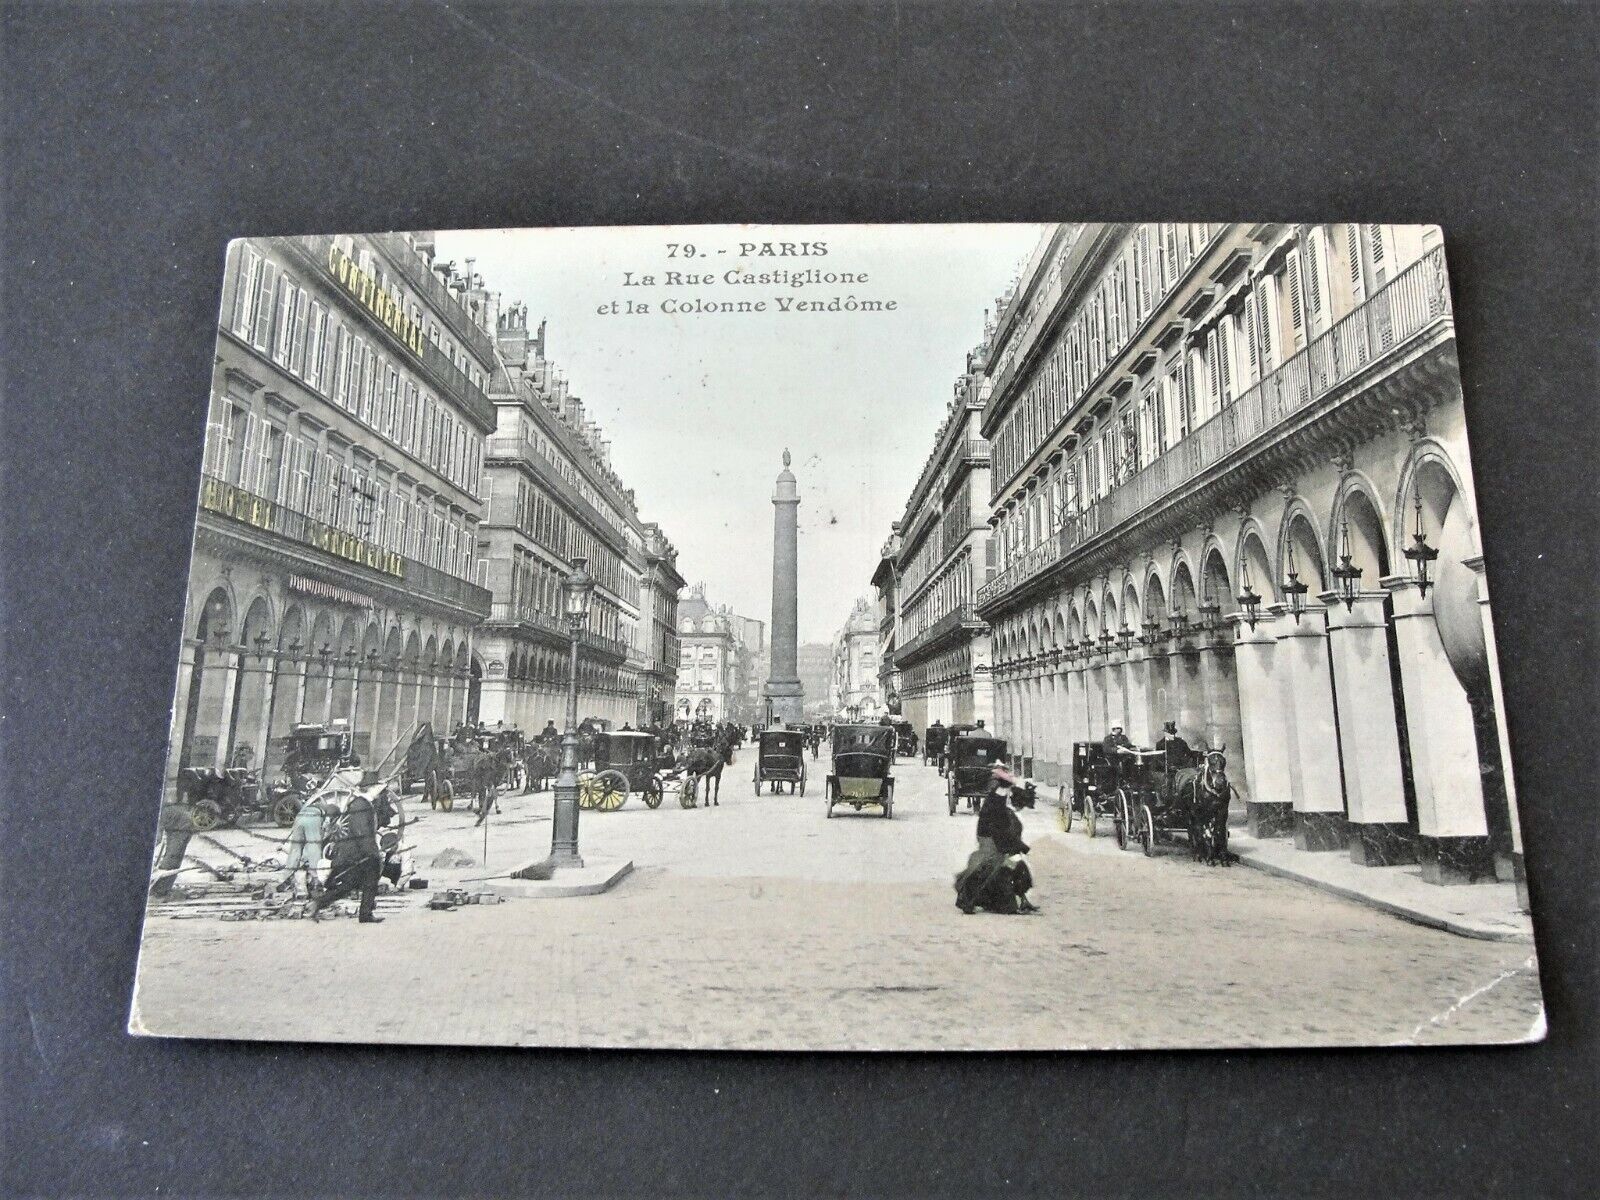 PARIS-Rue de Castiglione Colonne Vendôme, France-1908 Postmarked Postcard. RARE.